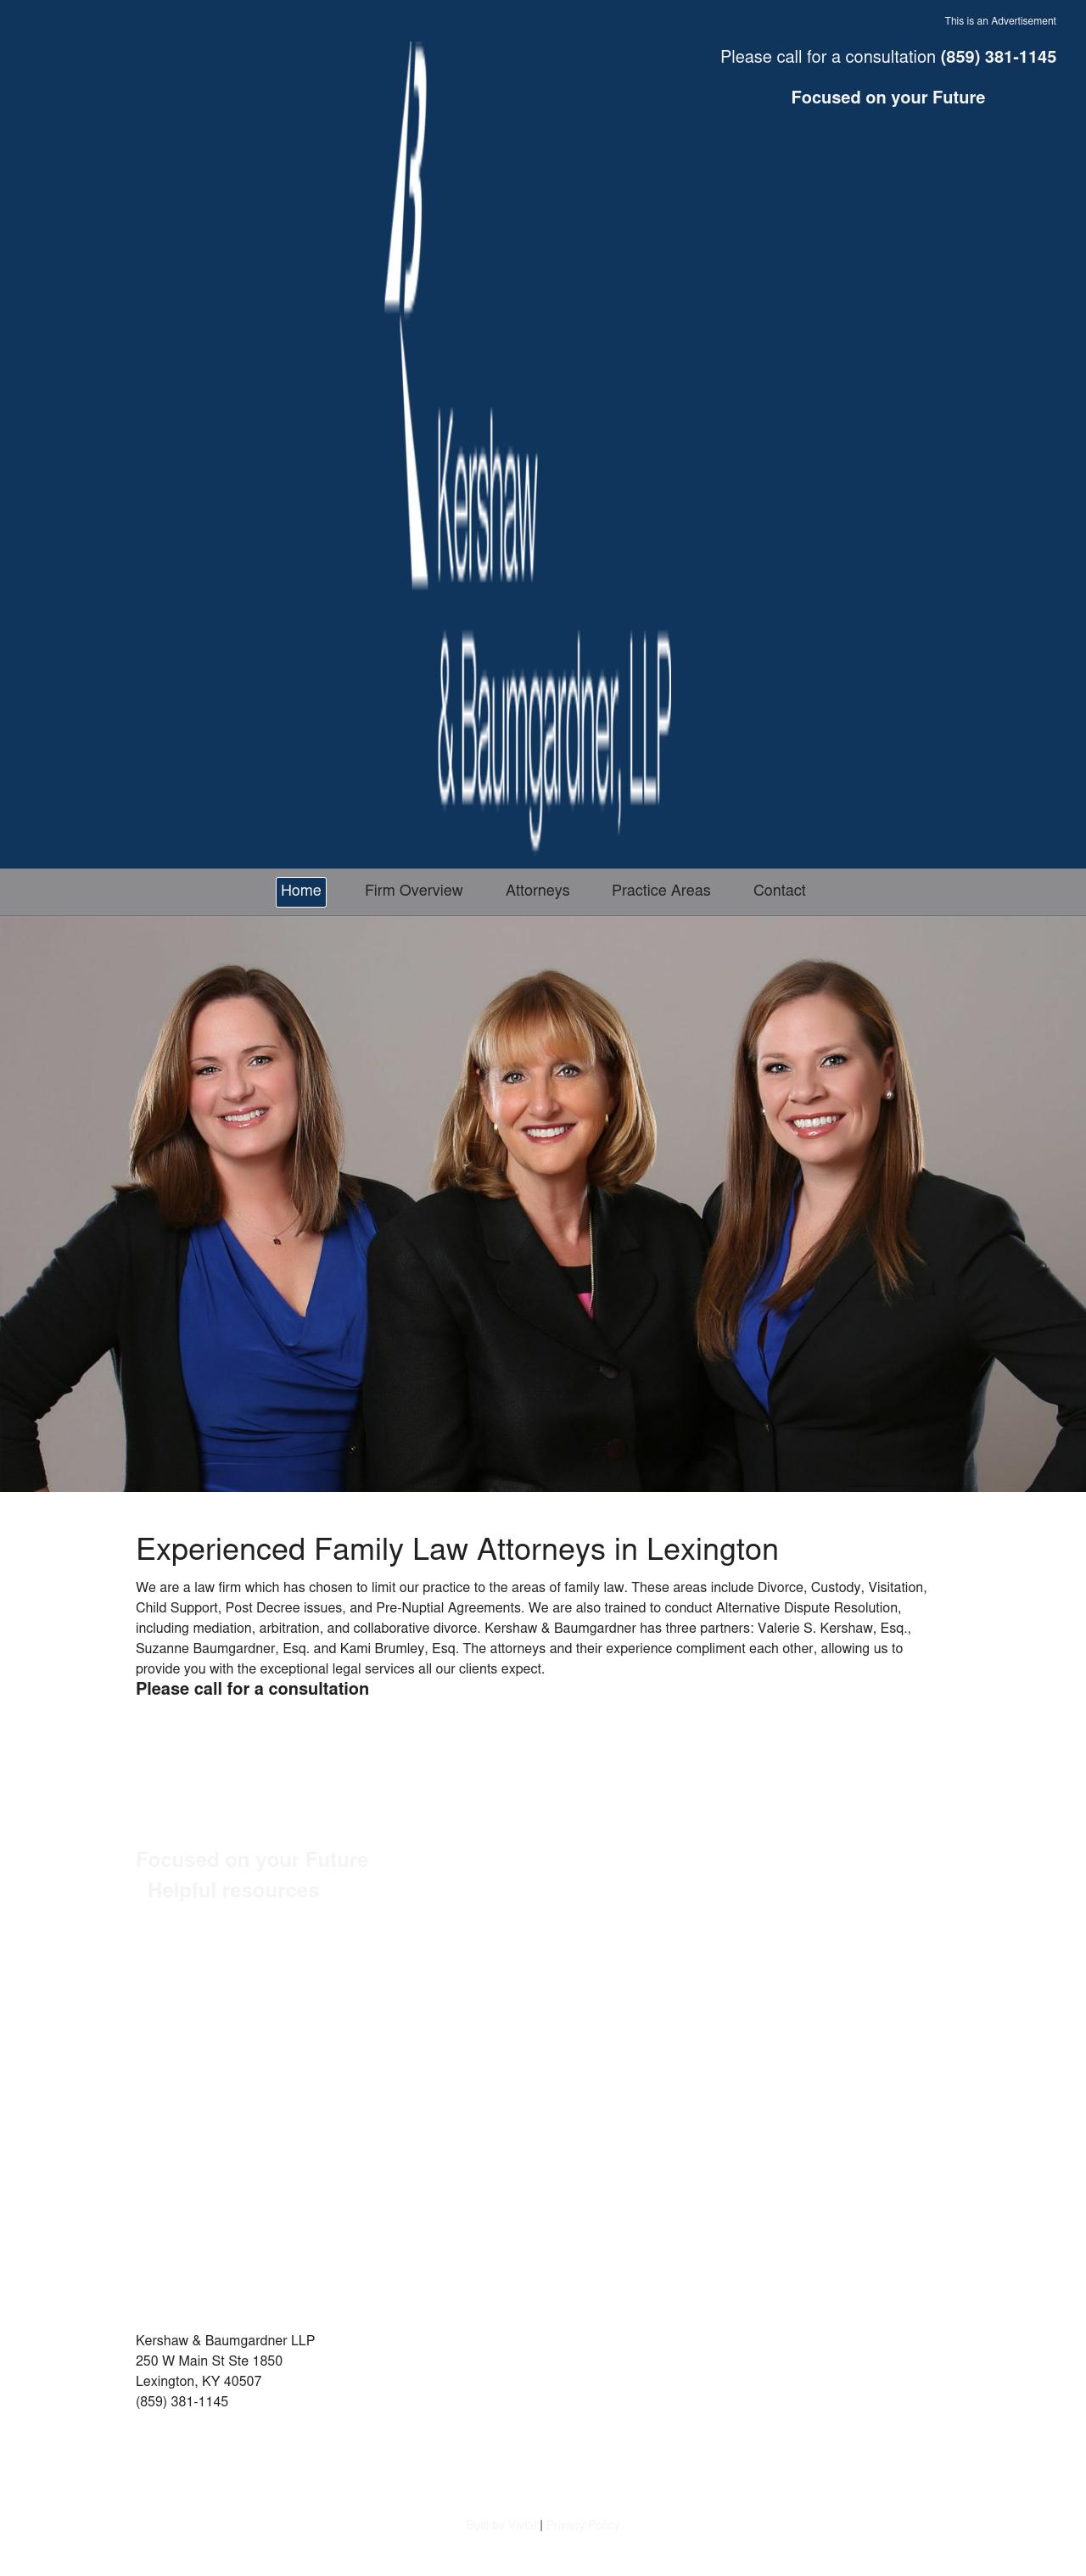 Kershaw & Baumgarner - Lexington KY Lawyers